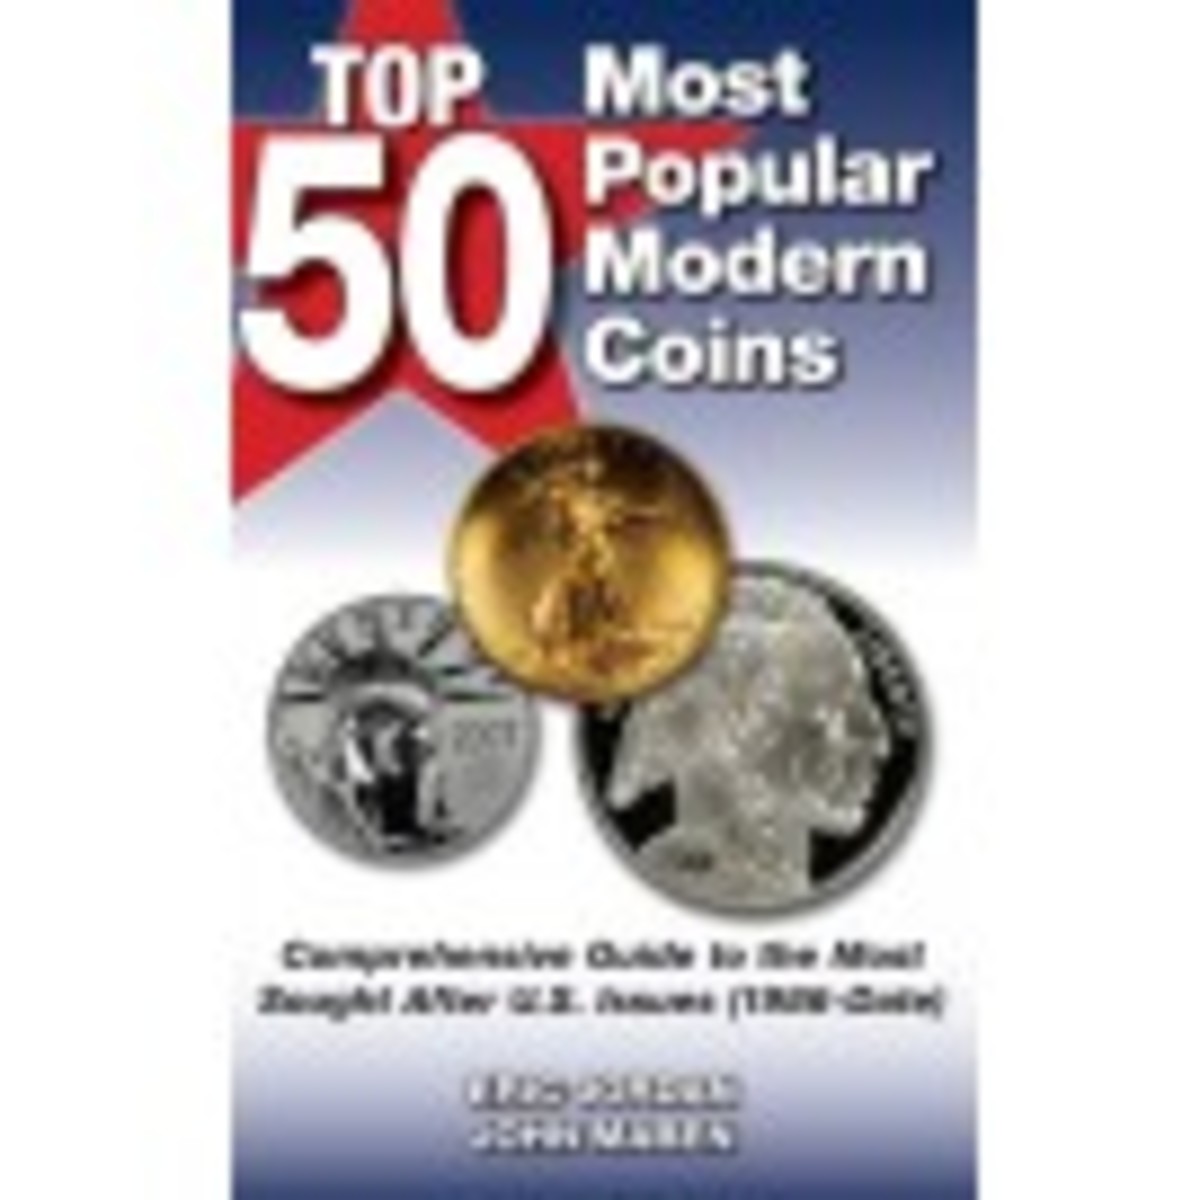 Top 50 Most Popular Modern Coins